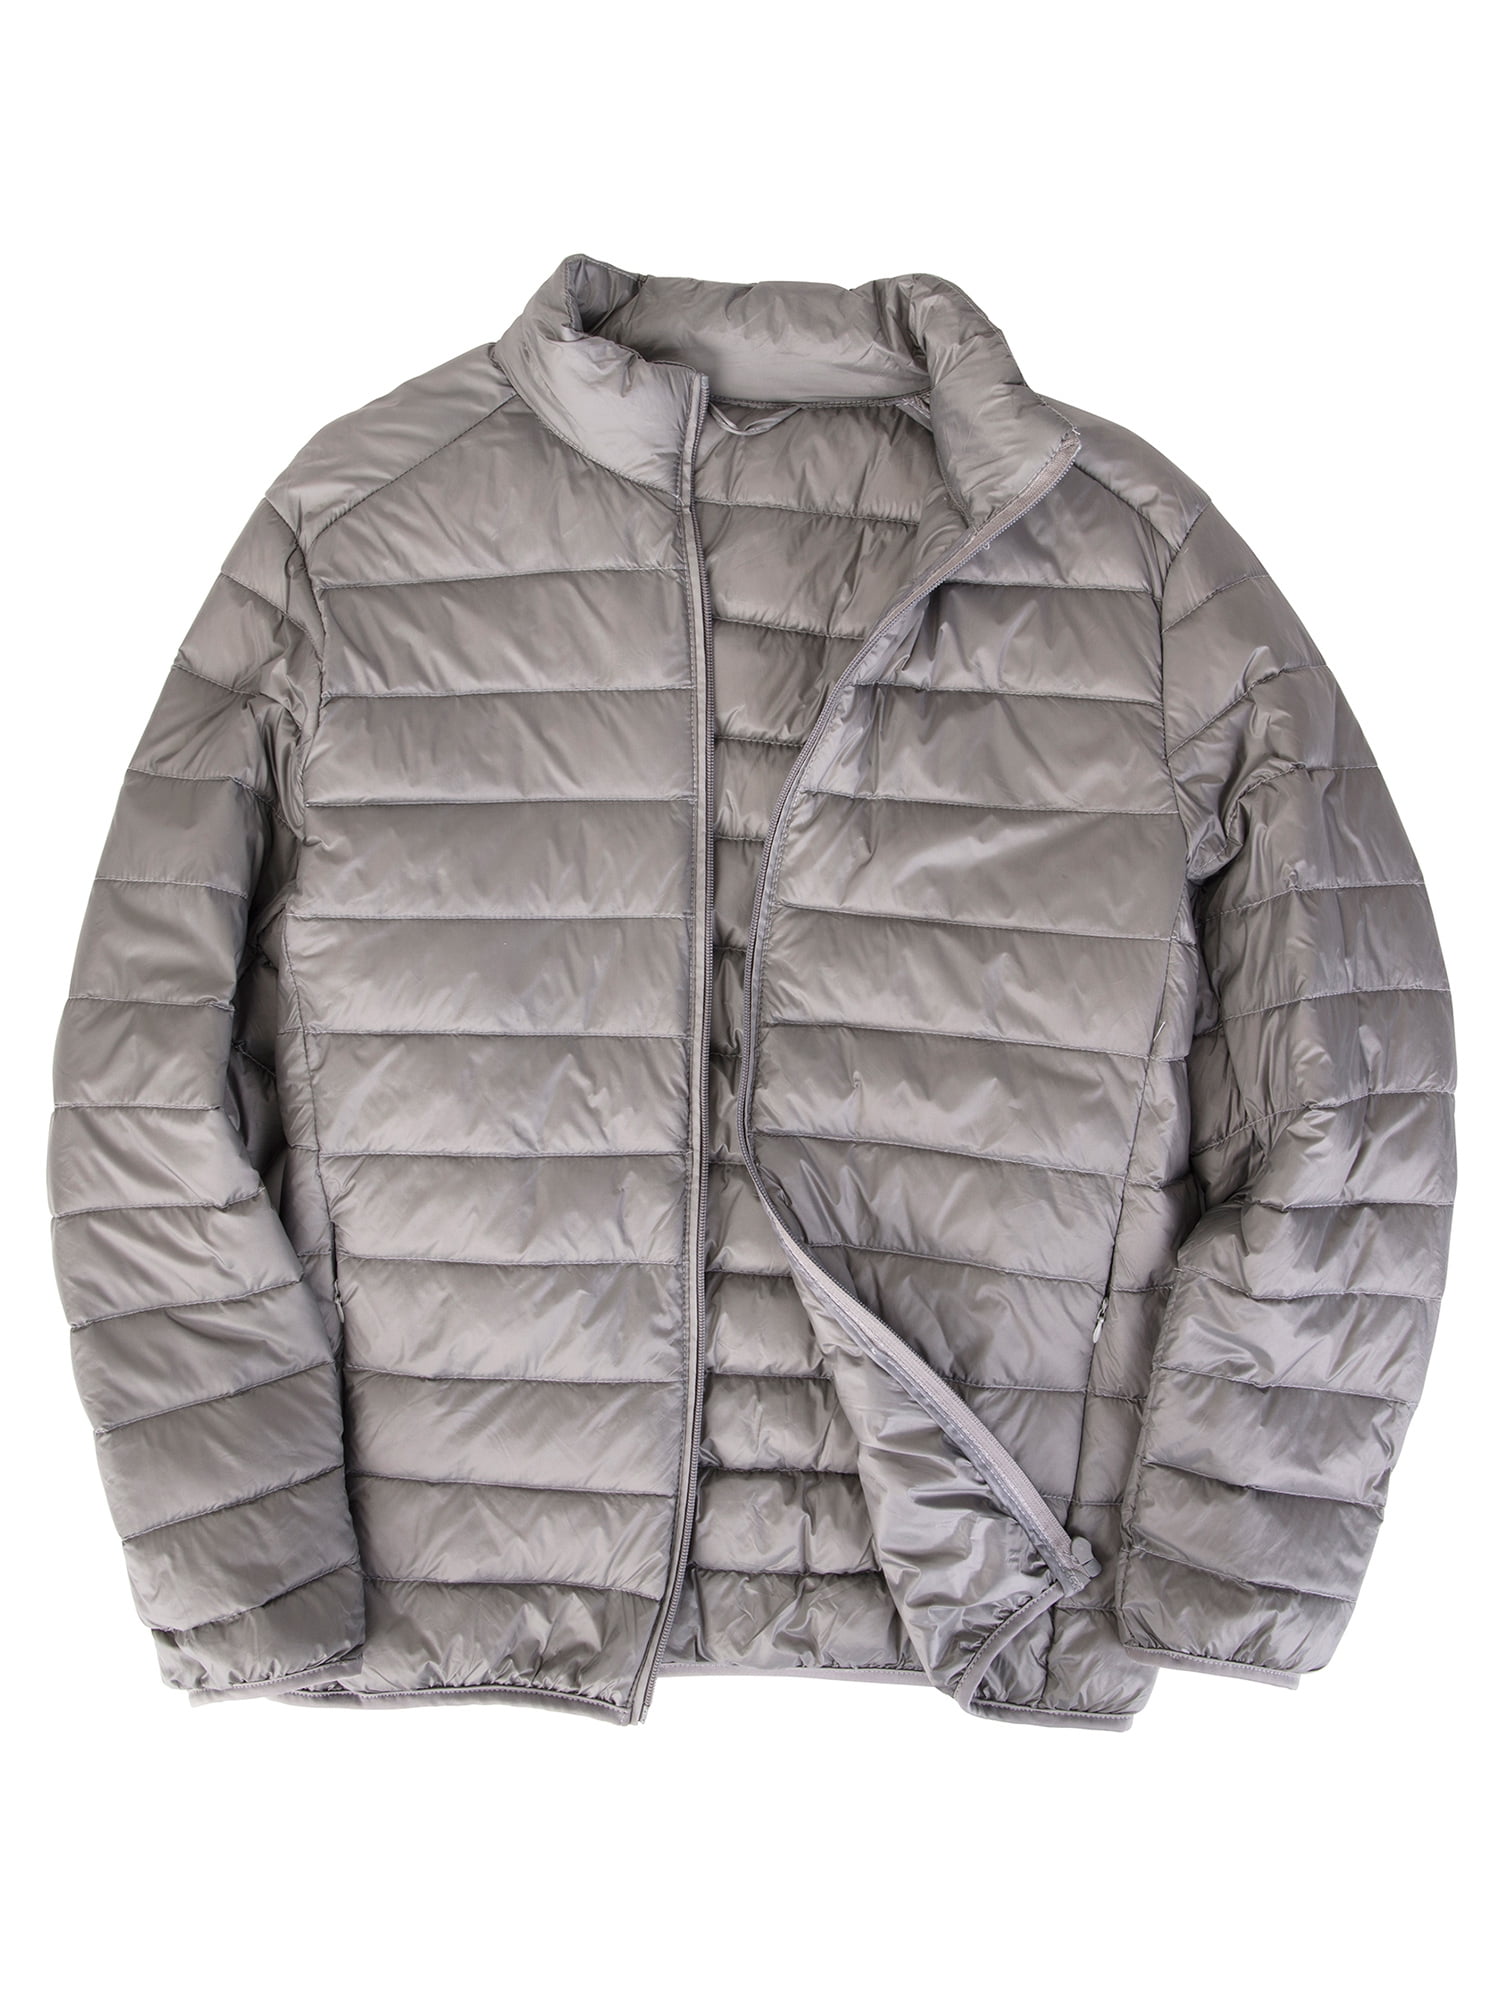 Men's Down Jacket Puffer Bubble Coat Packable Lightweight Warm Parka ...